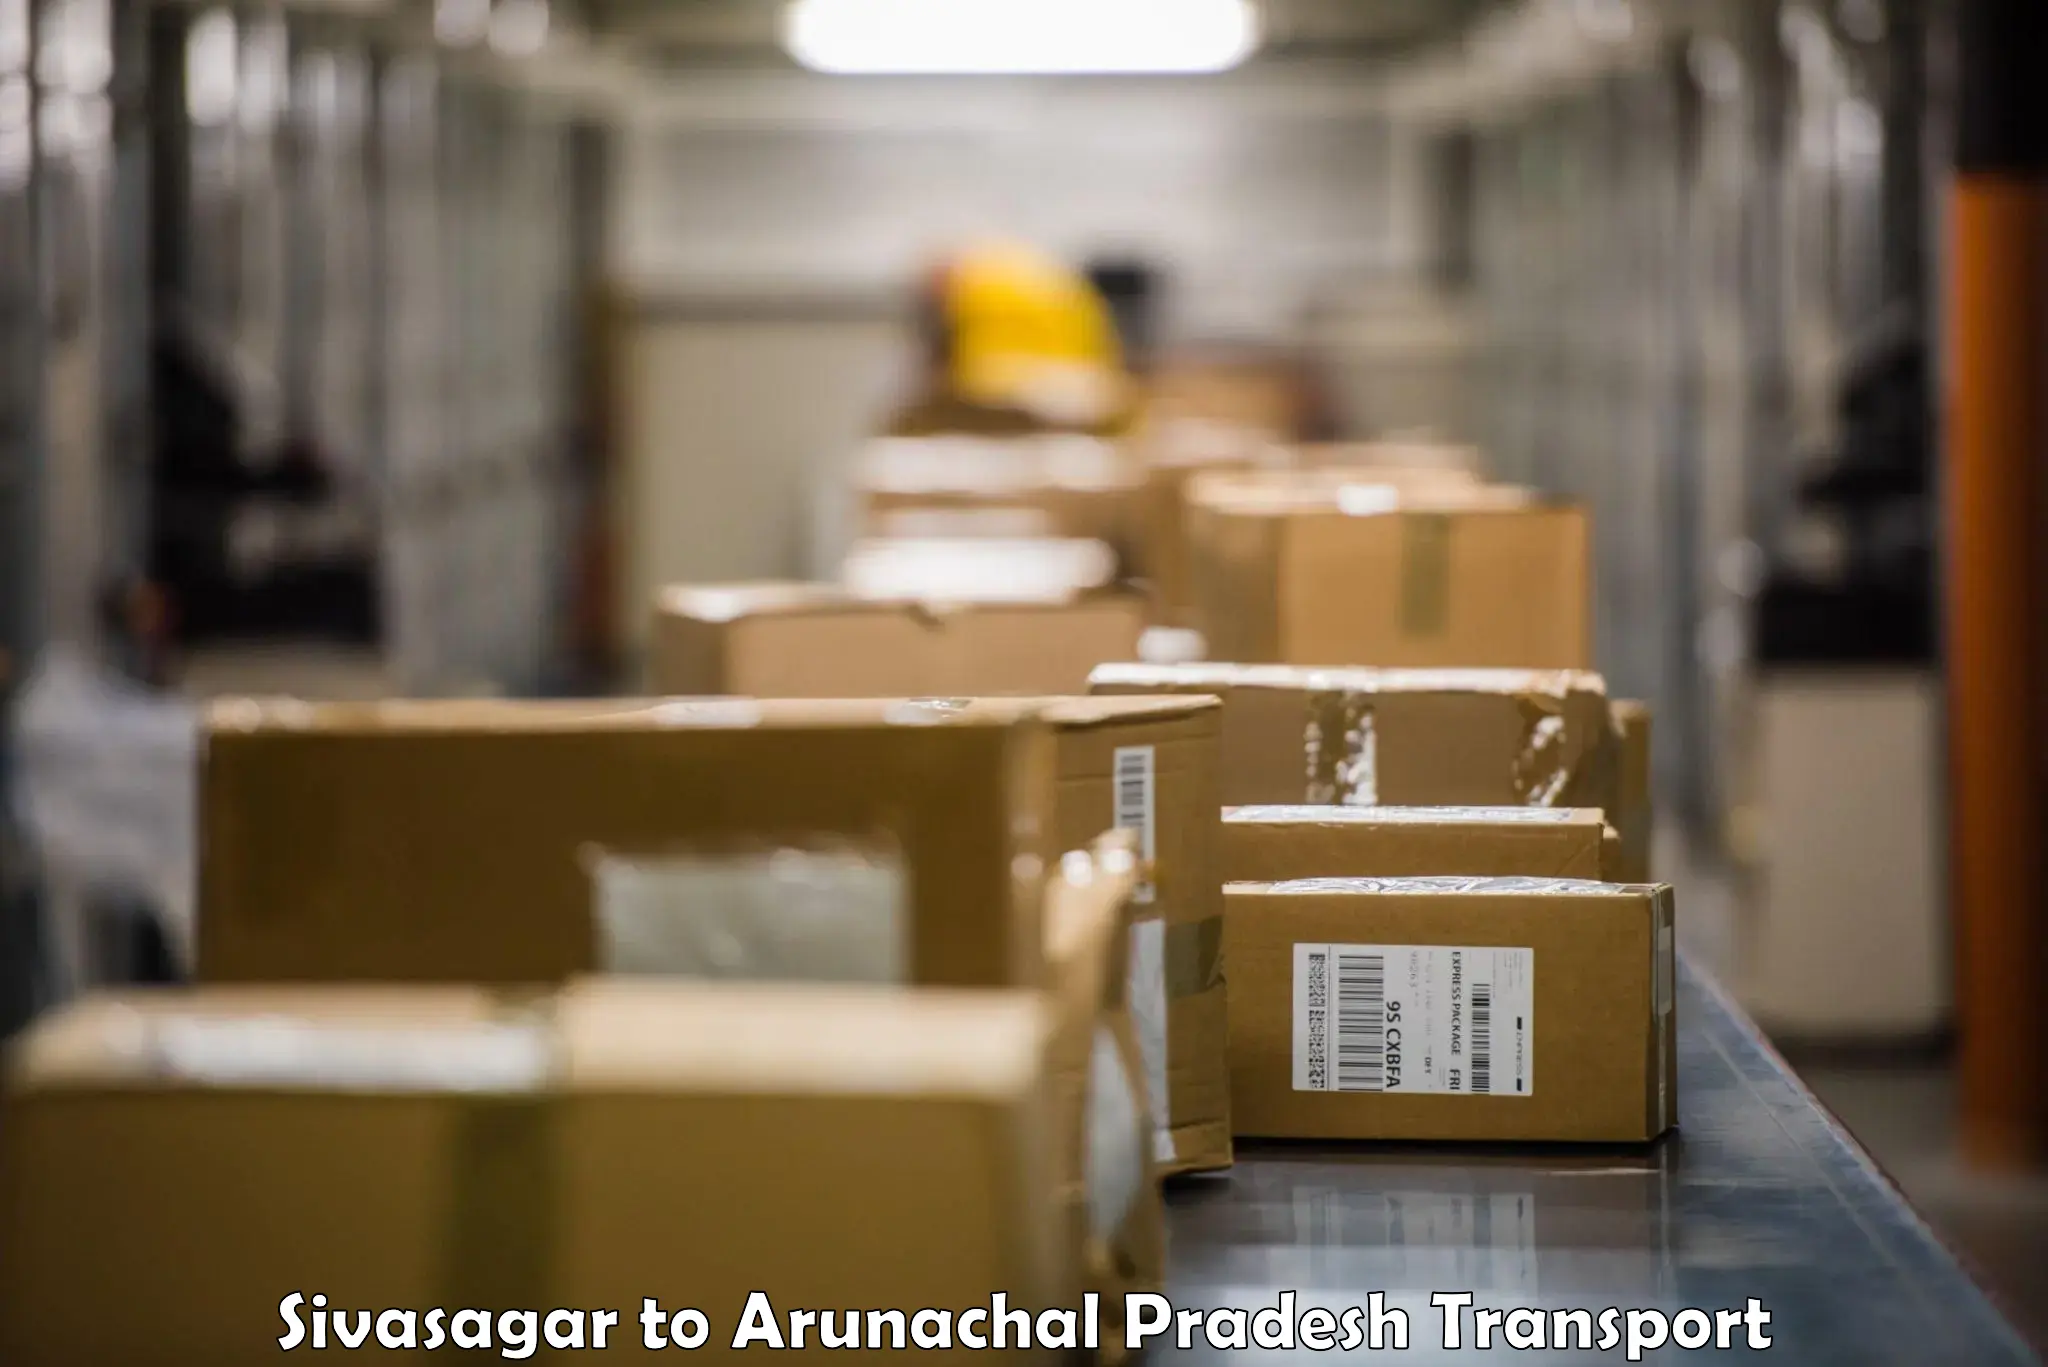 Truck transport companies in India Sivasagar to Kurung Kumey